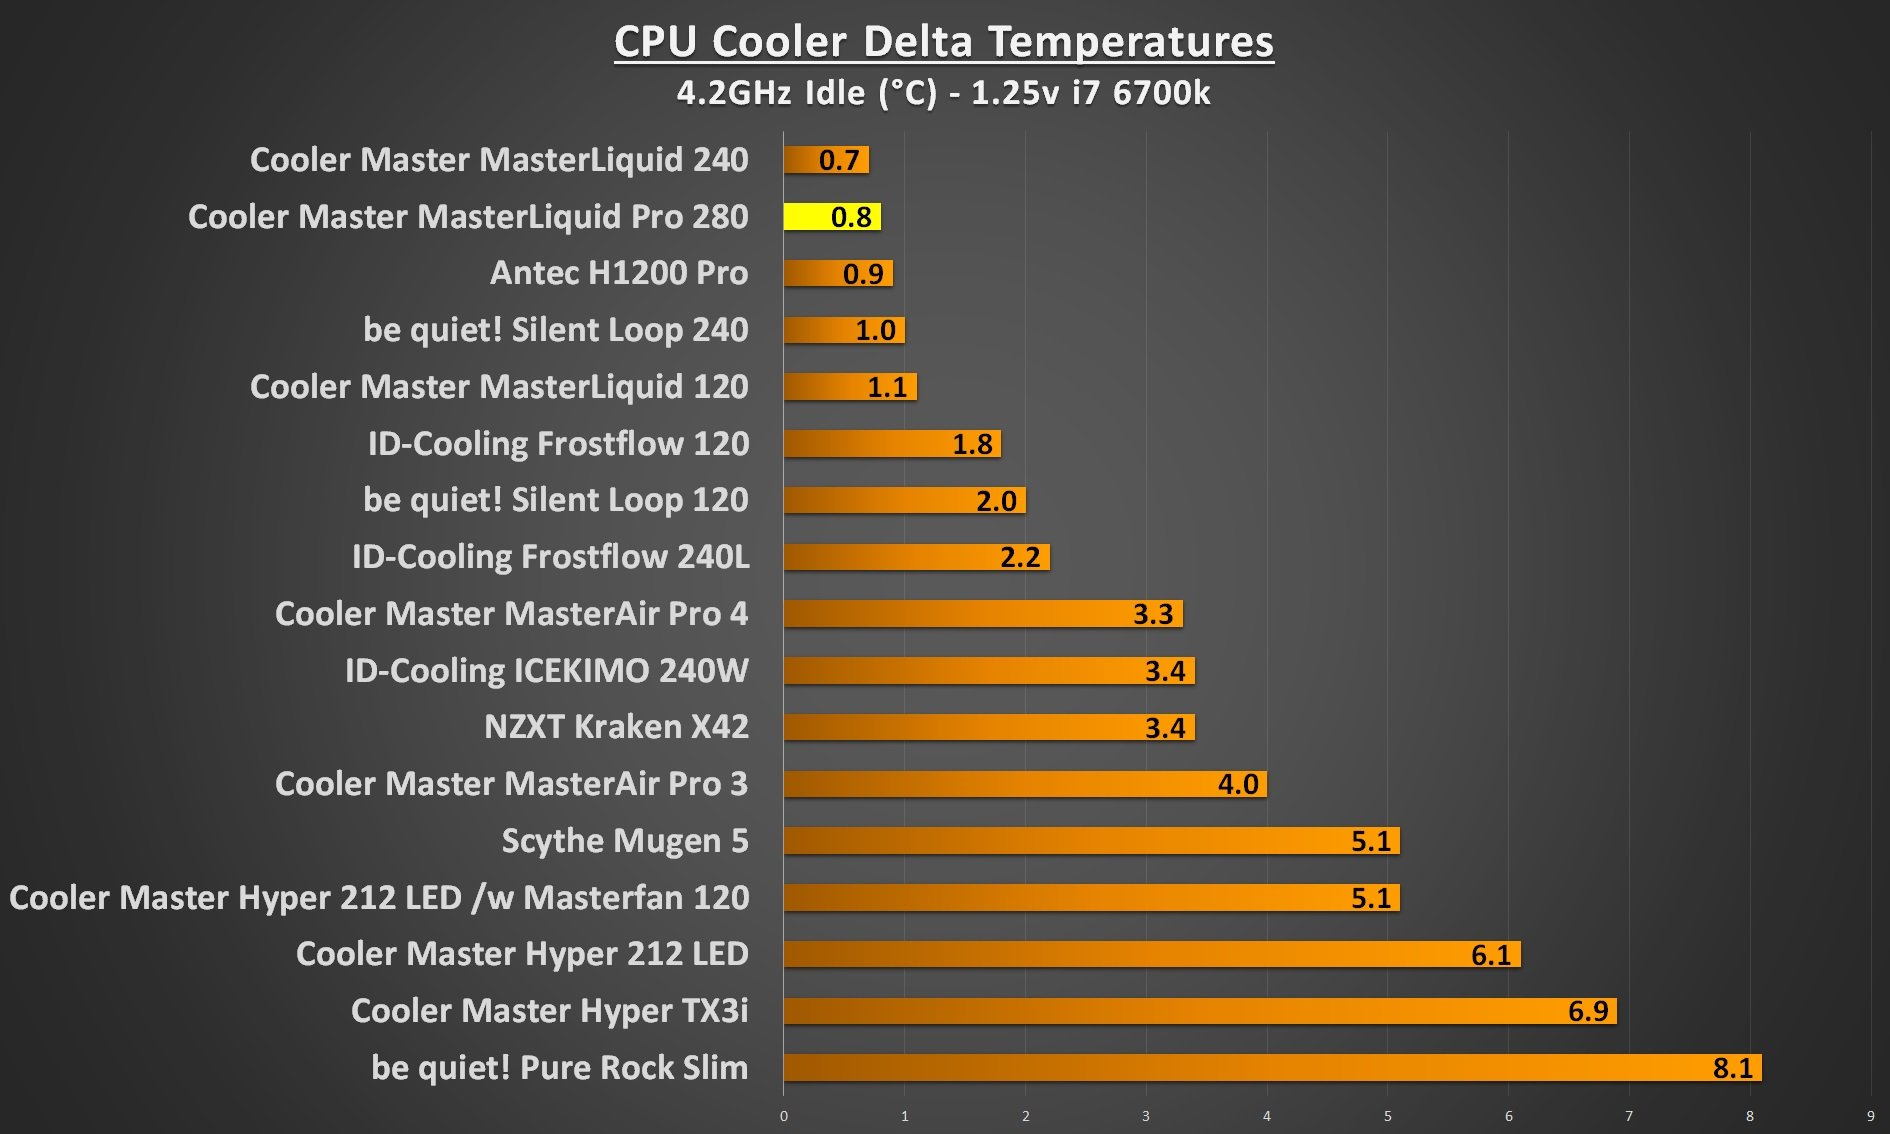 cooler master masterliquid pro 280 4.2Ghz idle